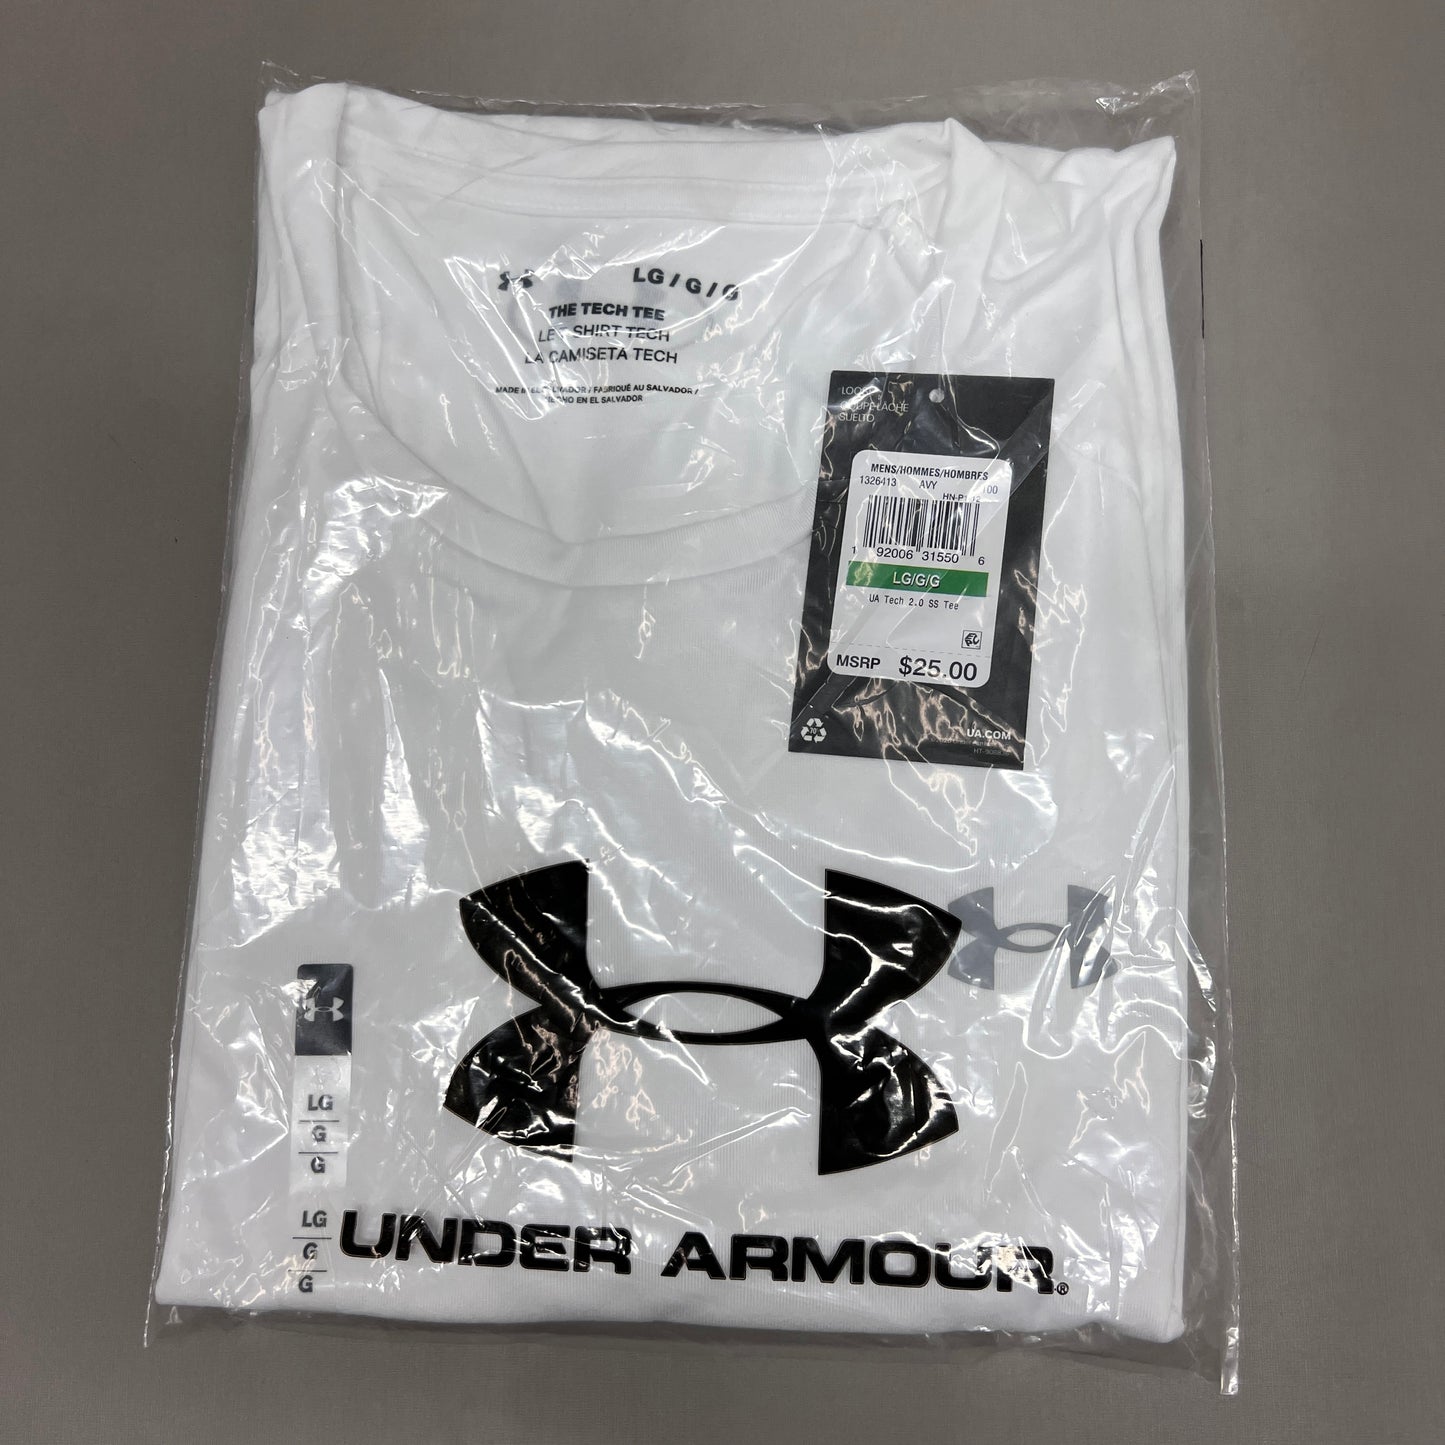 UNDER ARMOUR Tech 2.0 Short Sleeve Tee Men's White / Overcast Gray Sz L 1326413 (New)